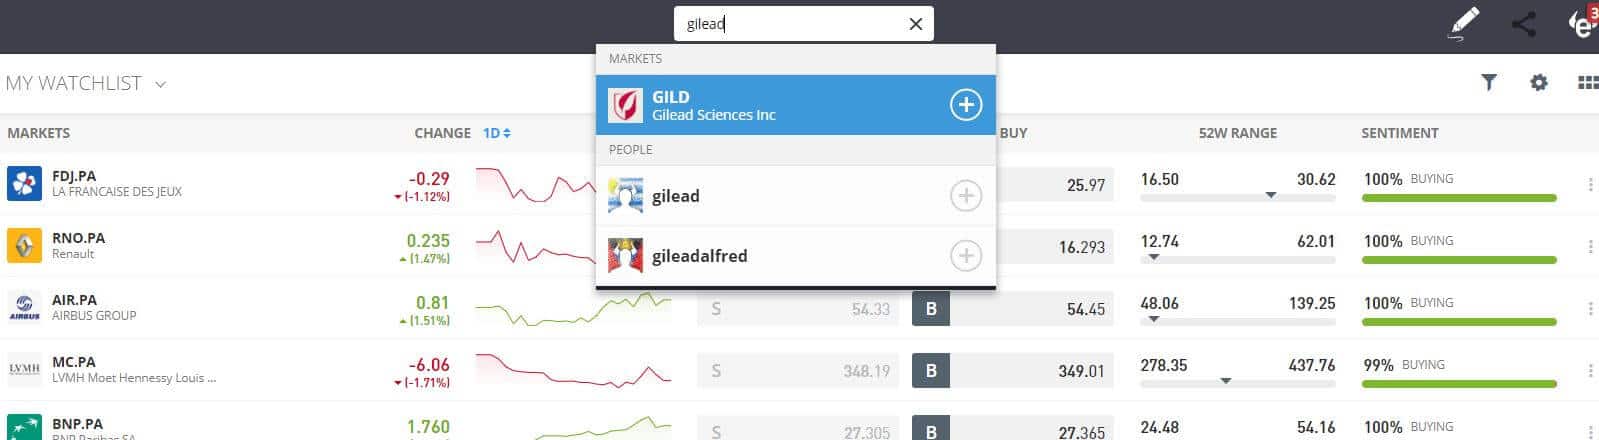 Search for Gilead stock on eToro